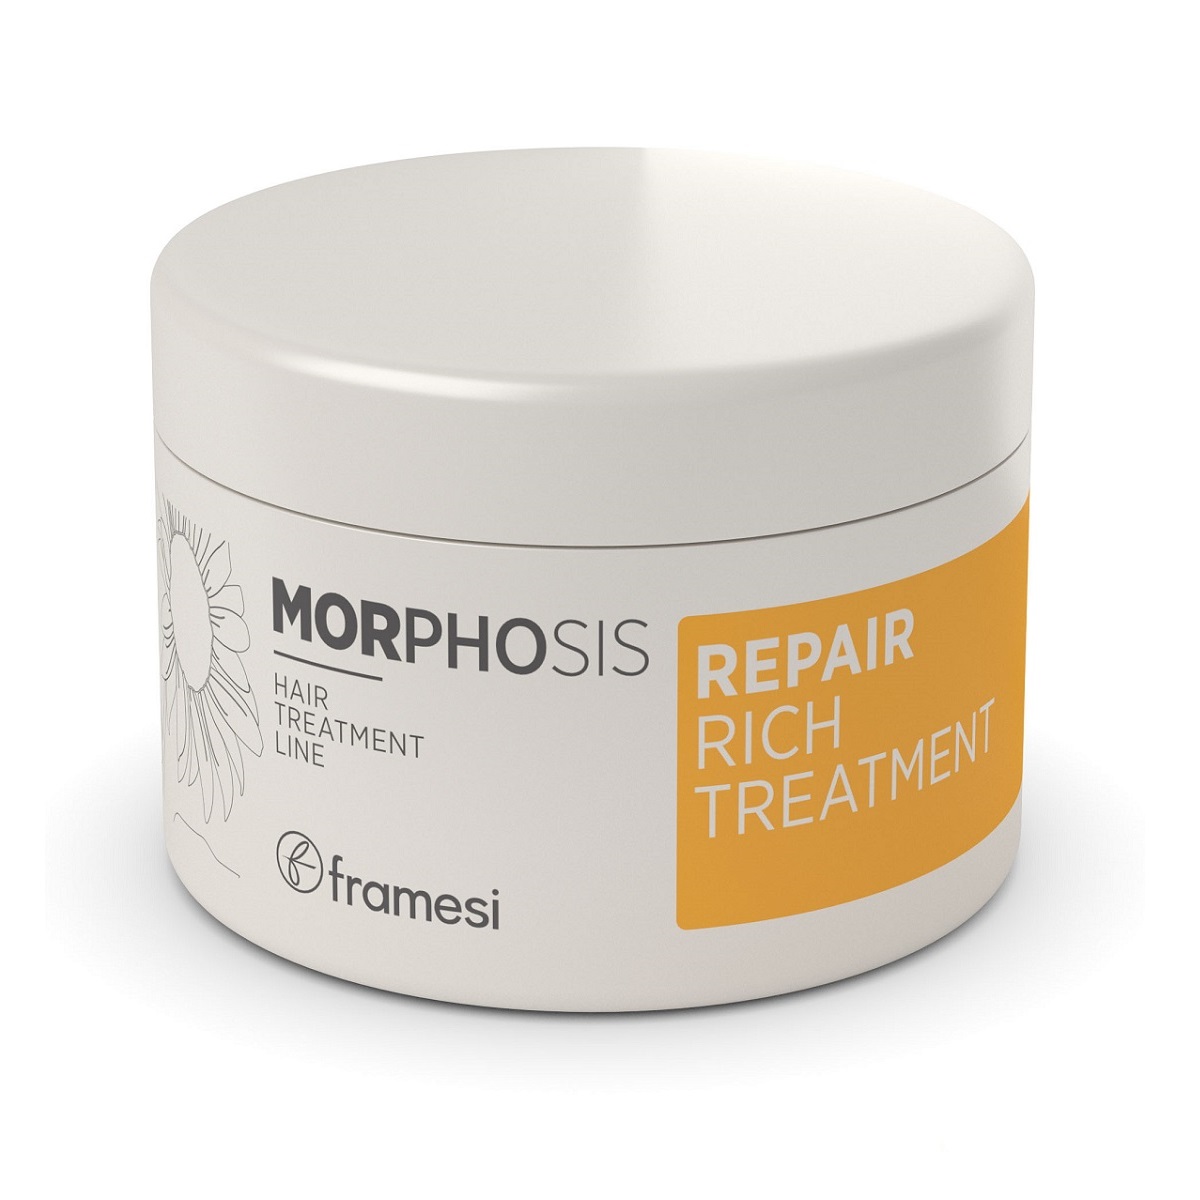 FRAMESI Восстанавливающая маска интенсивного действия Repair Rich Treatment, 200 мл (FRAMESI, Morphosis)